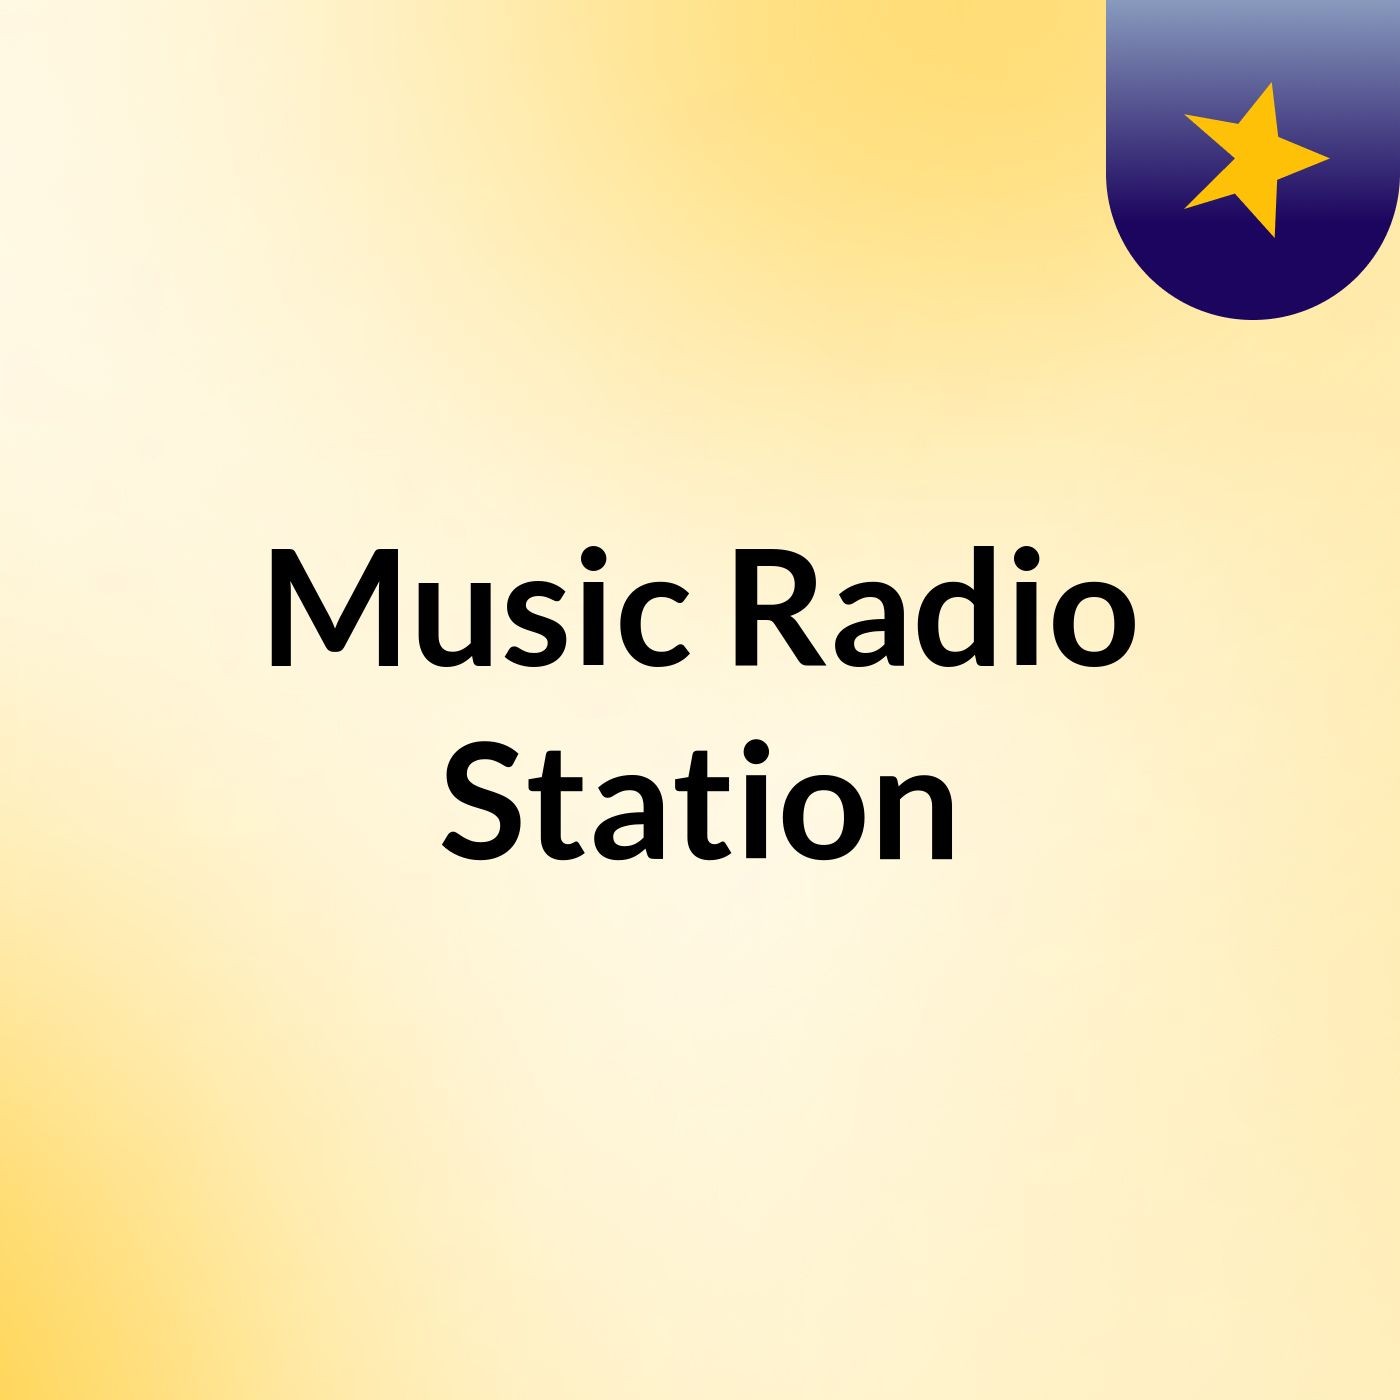 Music Radio Station